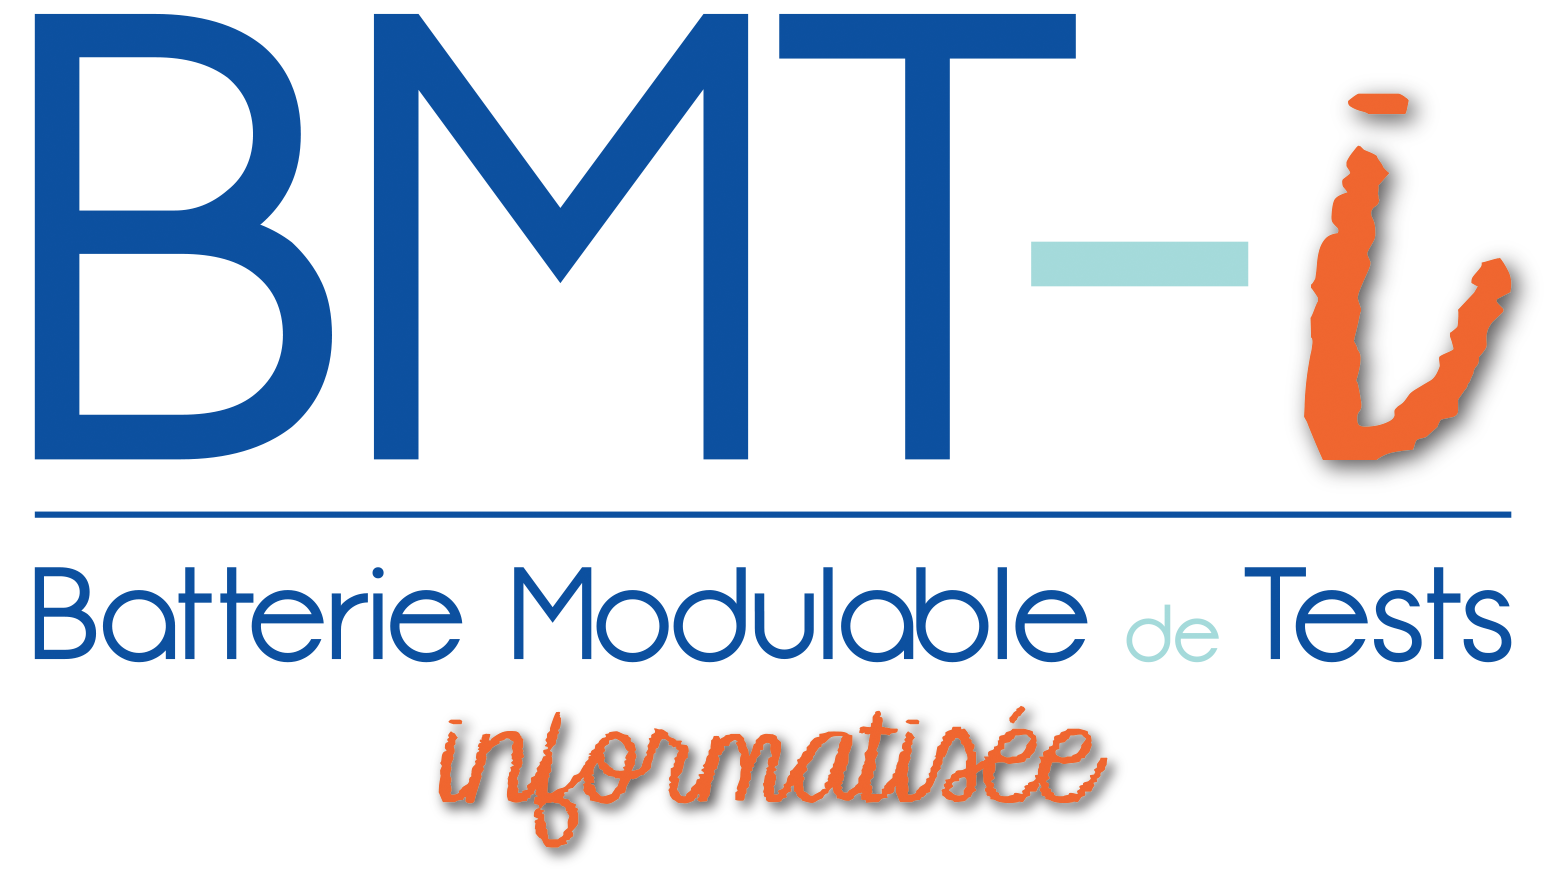 BMT-i Batterie Modulable de Tests Informatisée